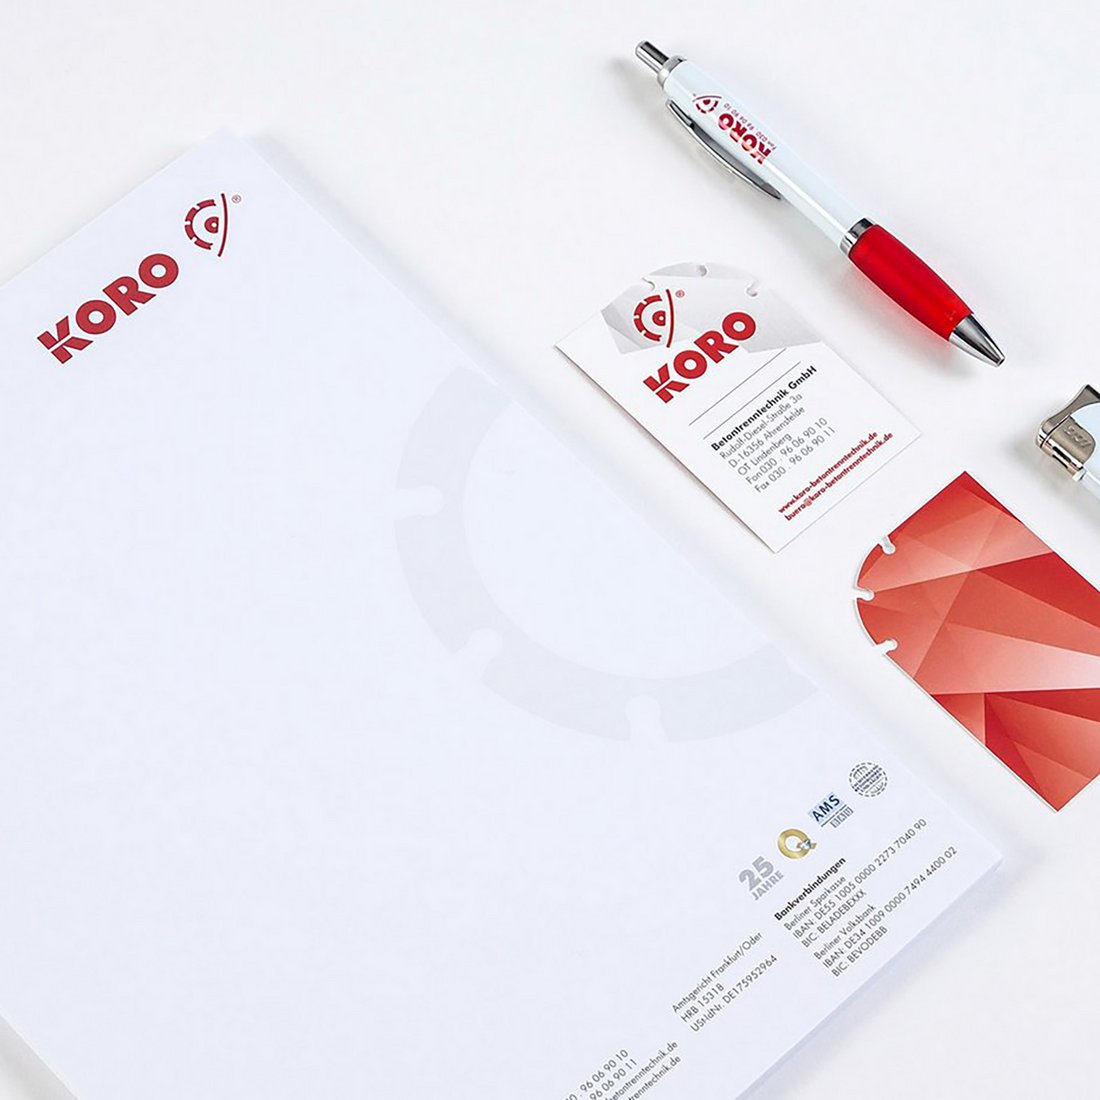 Koro - Corporate Design